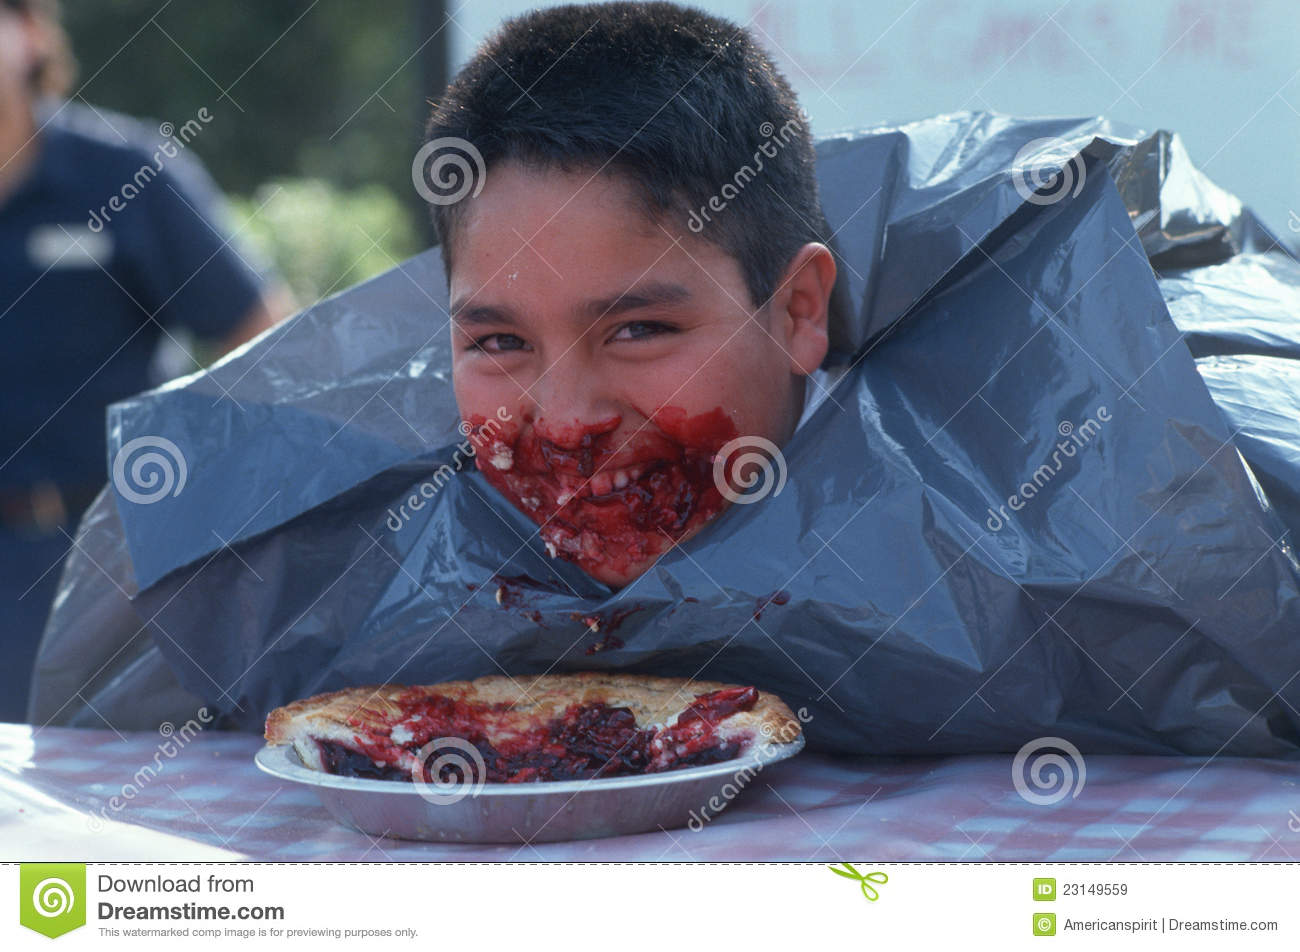 Boy At Pie Eating Contest Knott S Berry Farm Los Angeles California